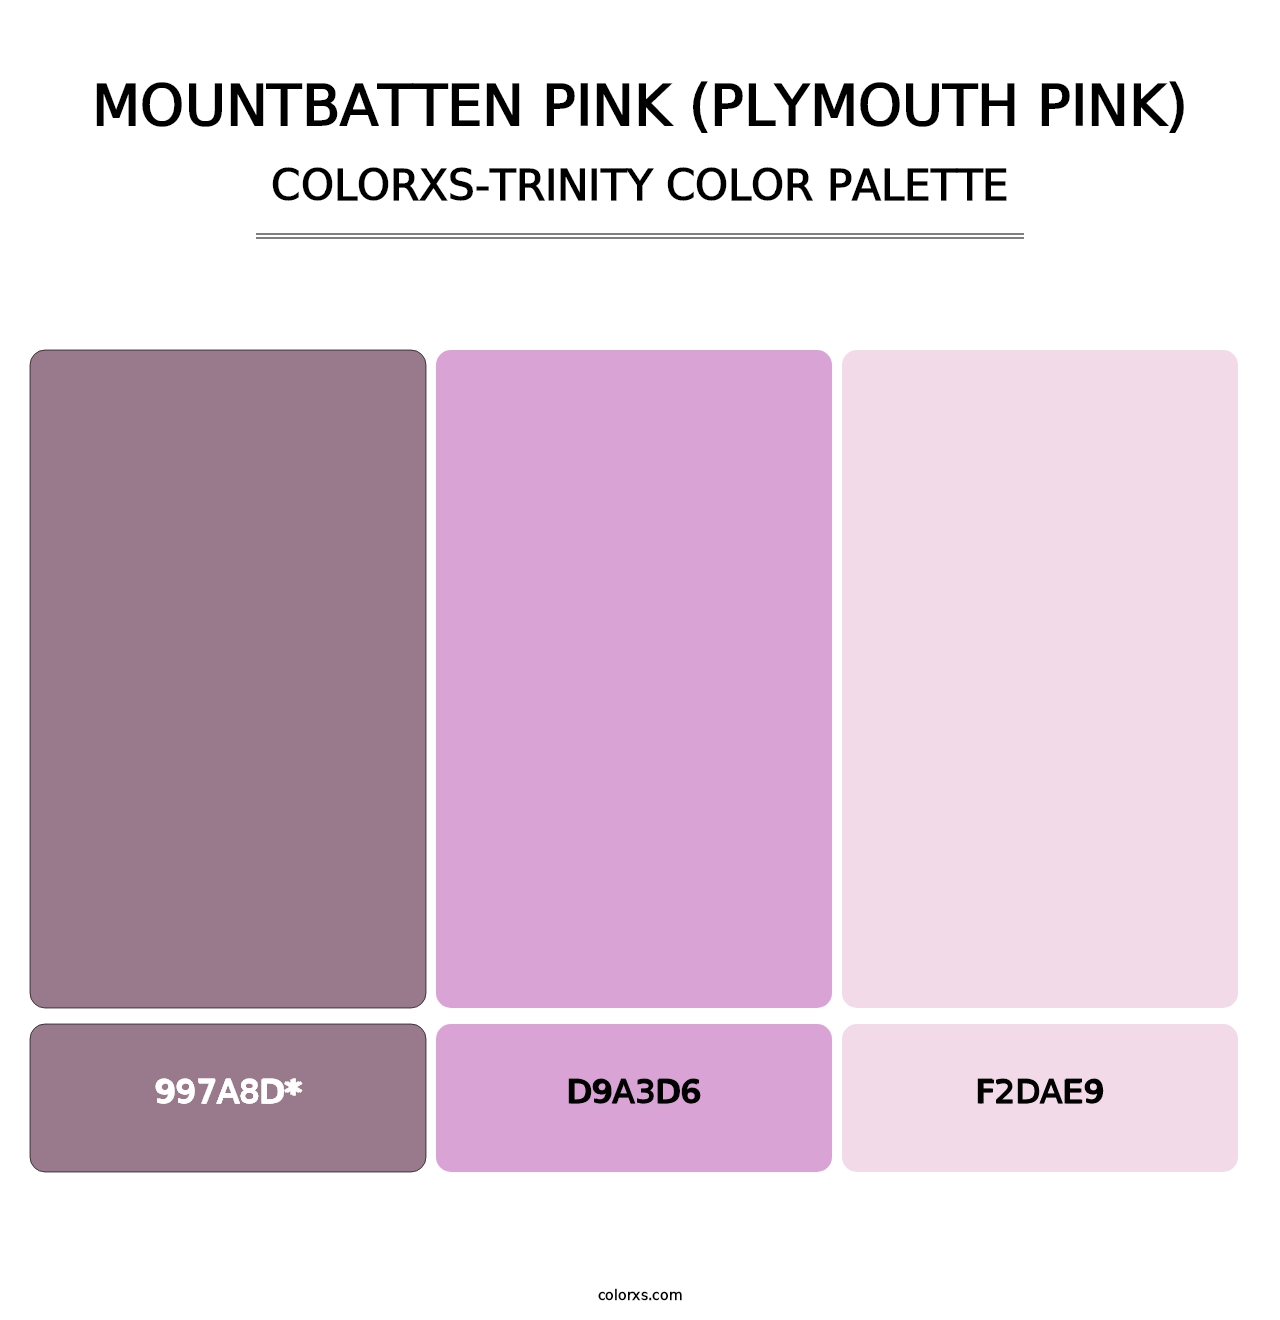 Mountbatten Pink (Plymouth Pink) - Colorxs Trinity Palette